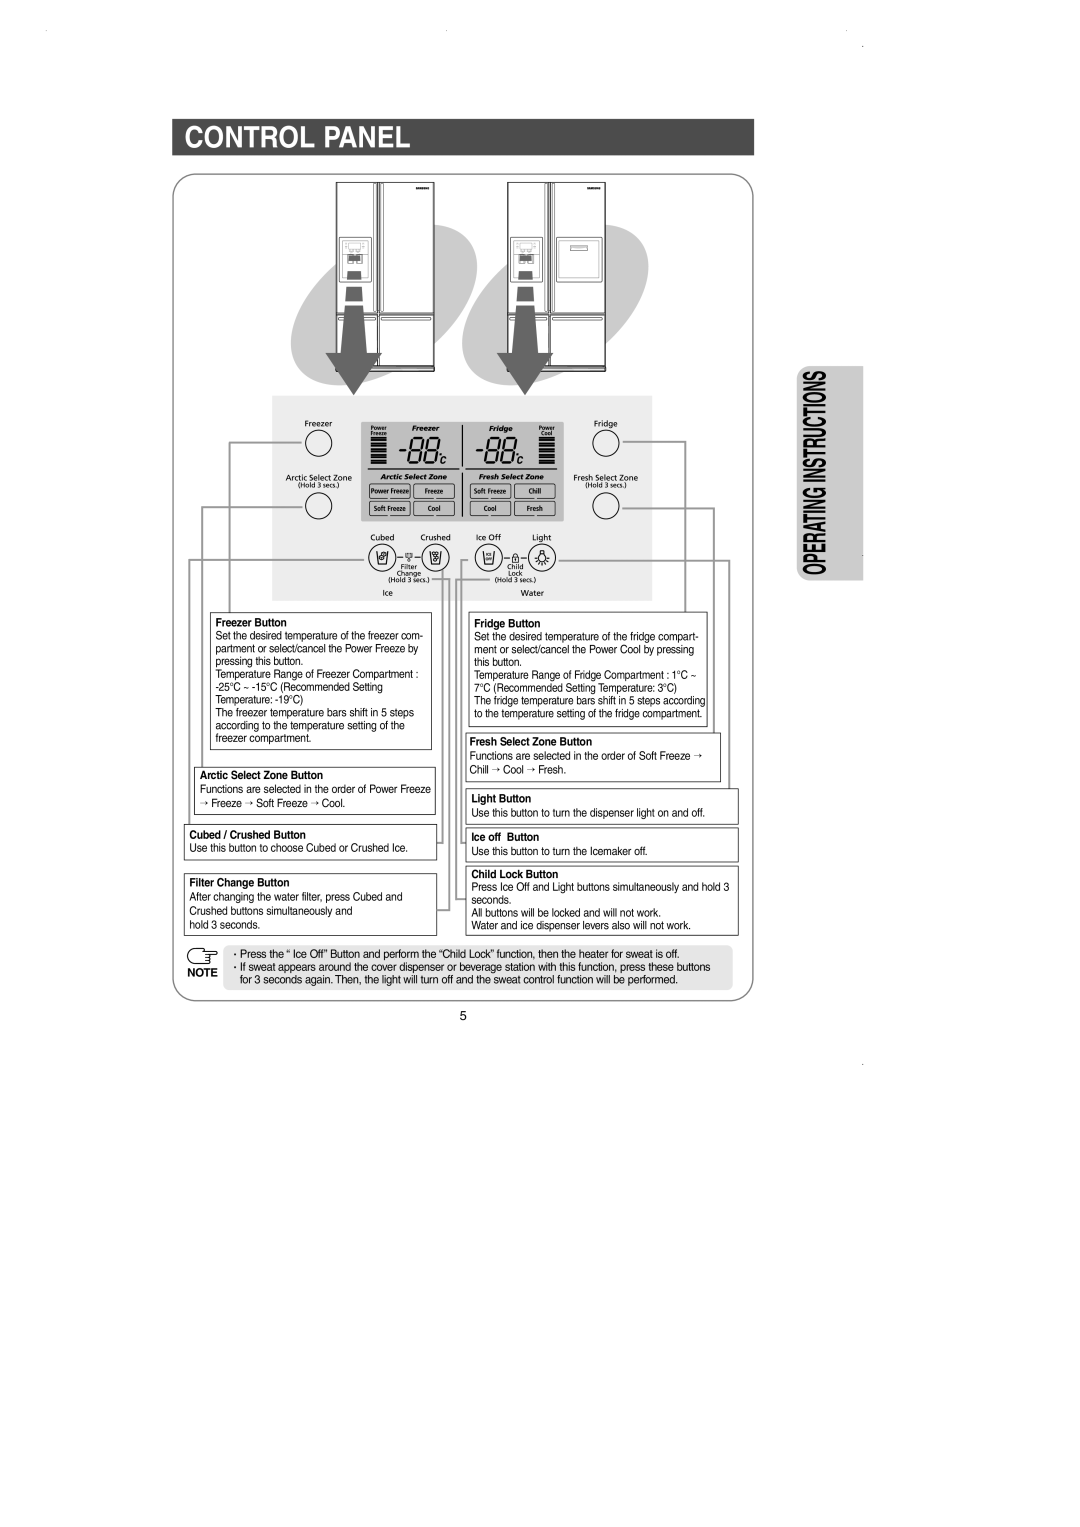 Samsung DA99-01225E Control Panel, Operating Instructions, Freezer Button, Arctic Select Zone Button, Filter Change Button 